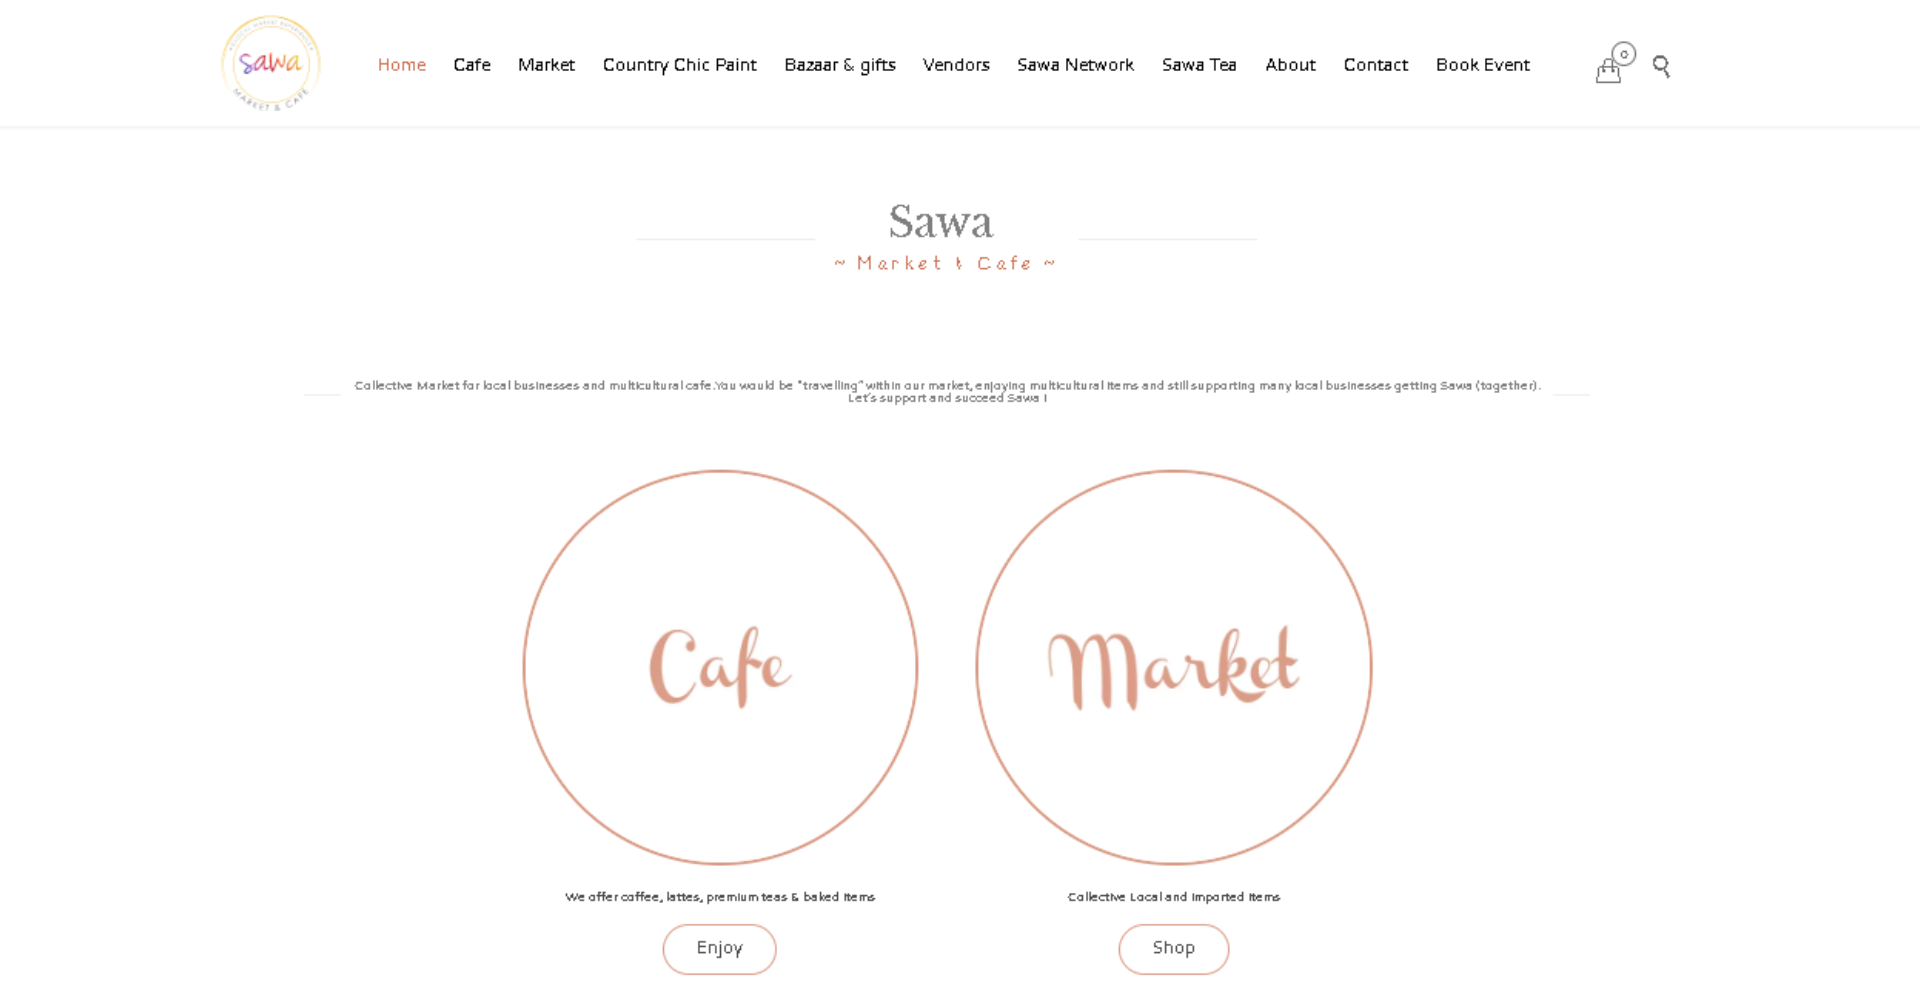 Sawa Market & Cafe